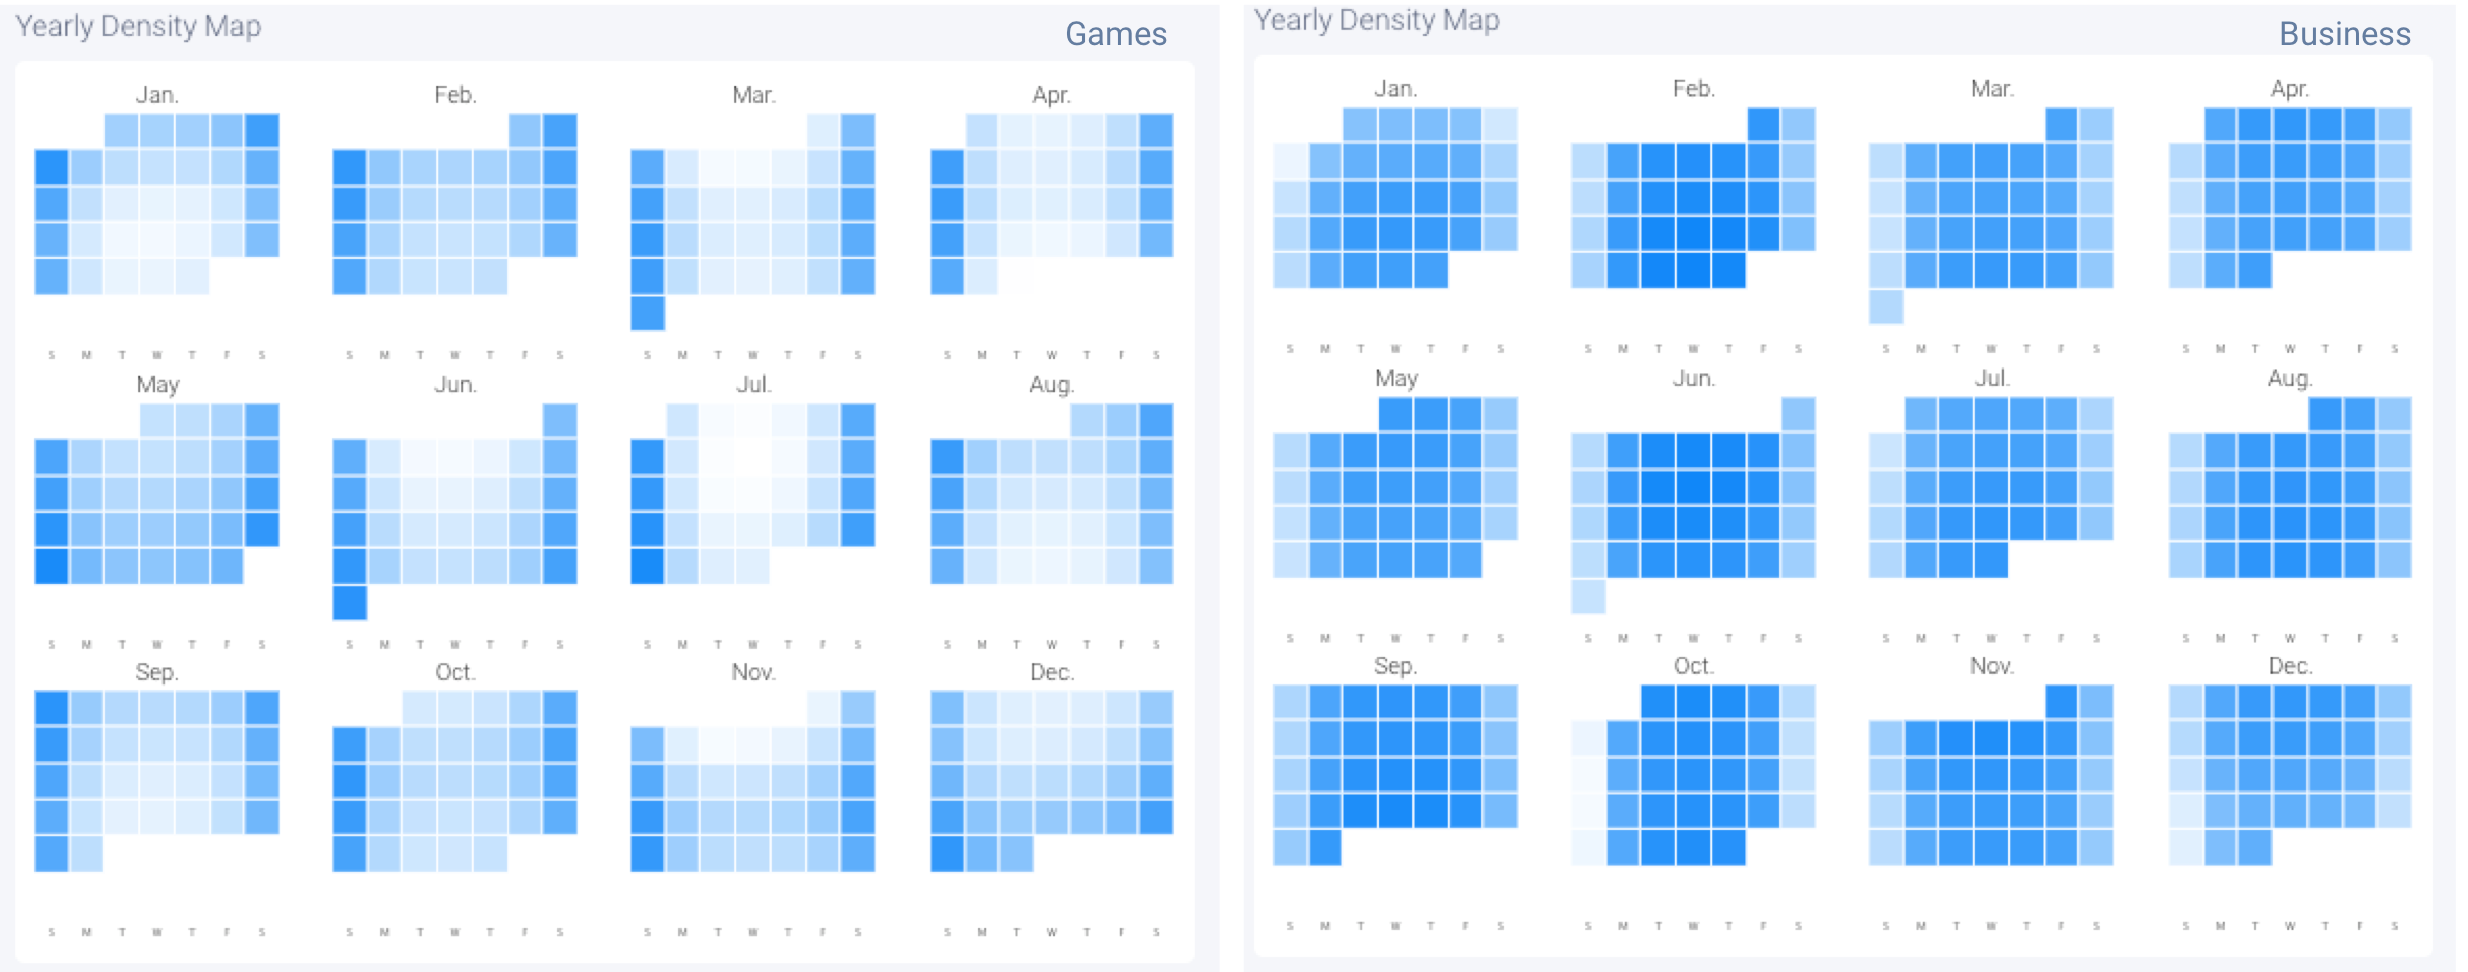 AppTweak Market Intelligence Seasonality Density Map of Games vs. Business (US)